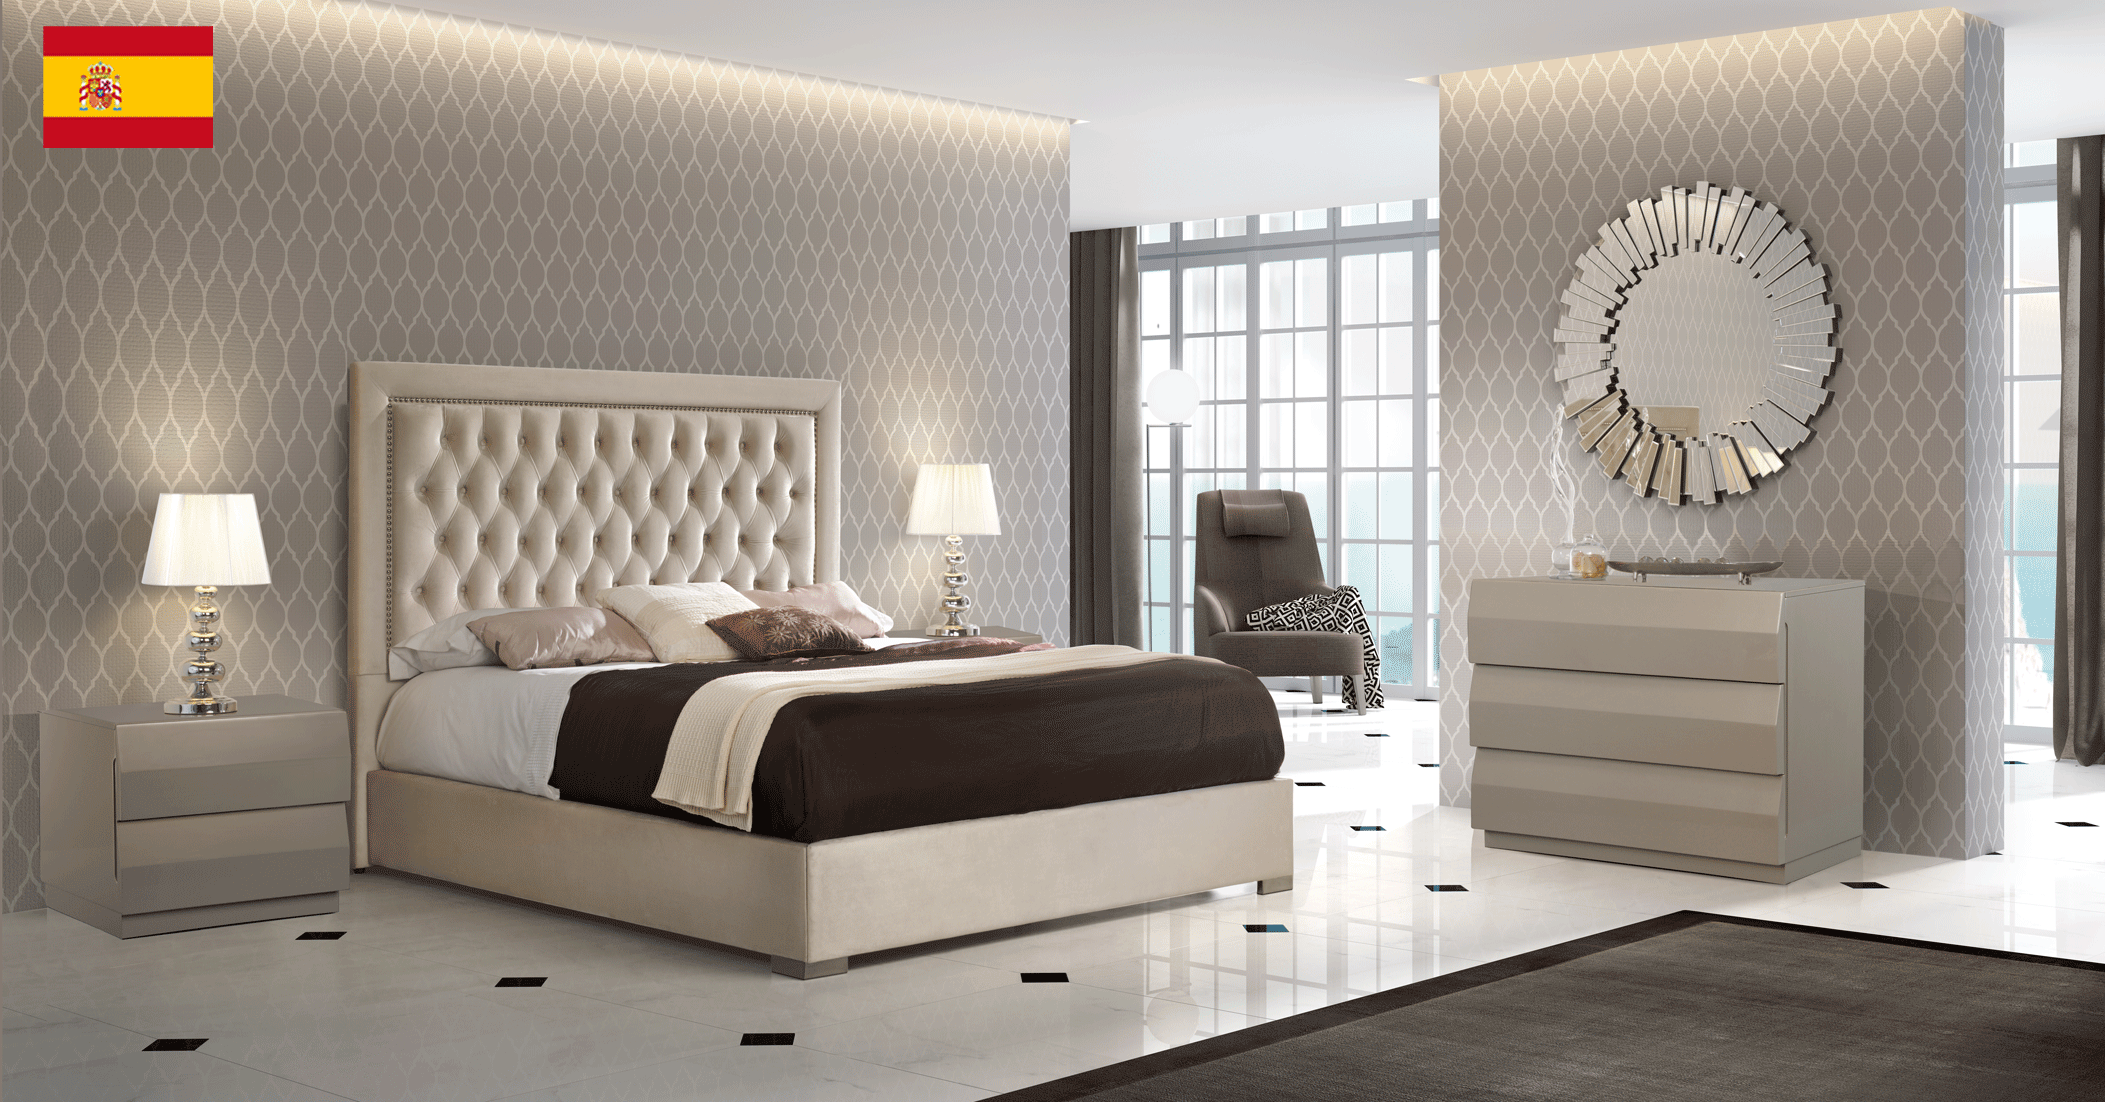 Bedroom Furniture Beds Adagio Bedroom w/Storage, M152, C152, E100